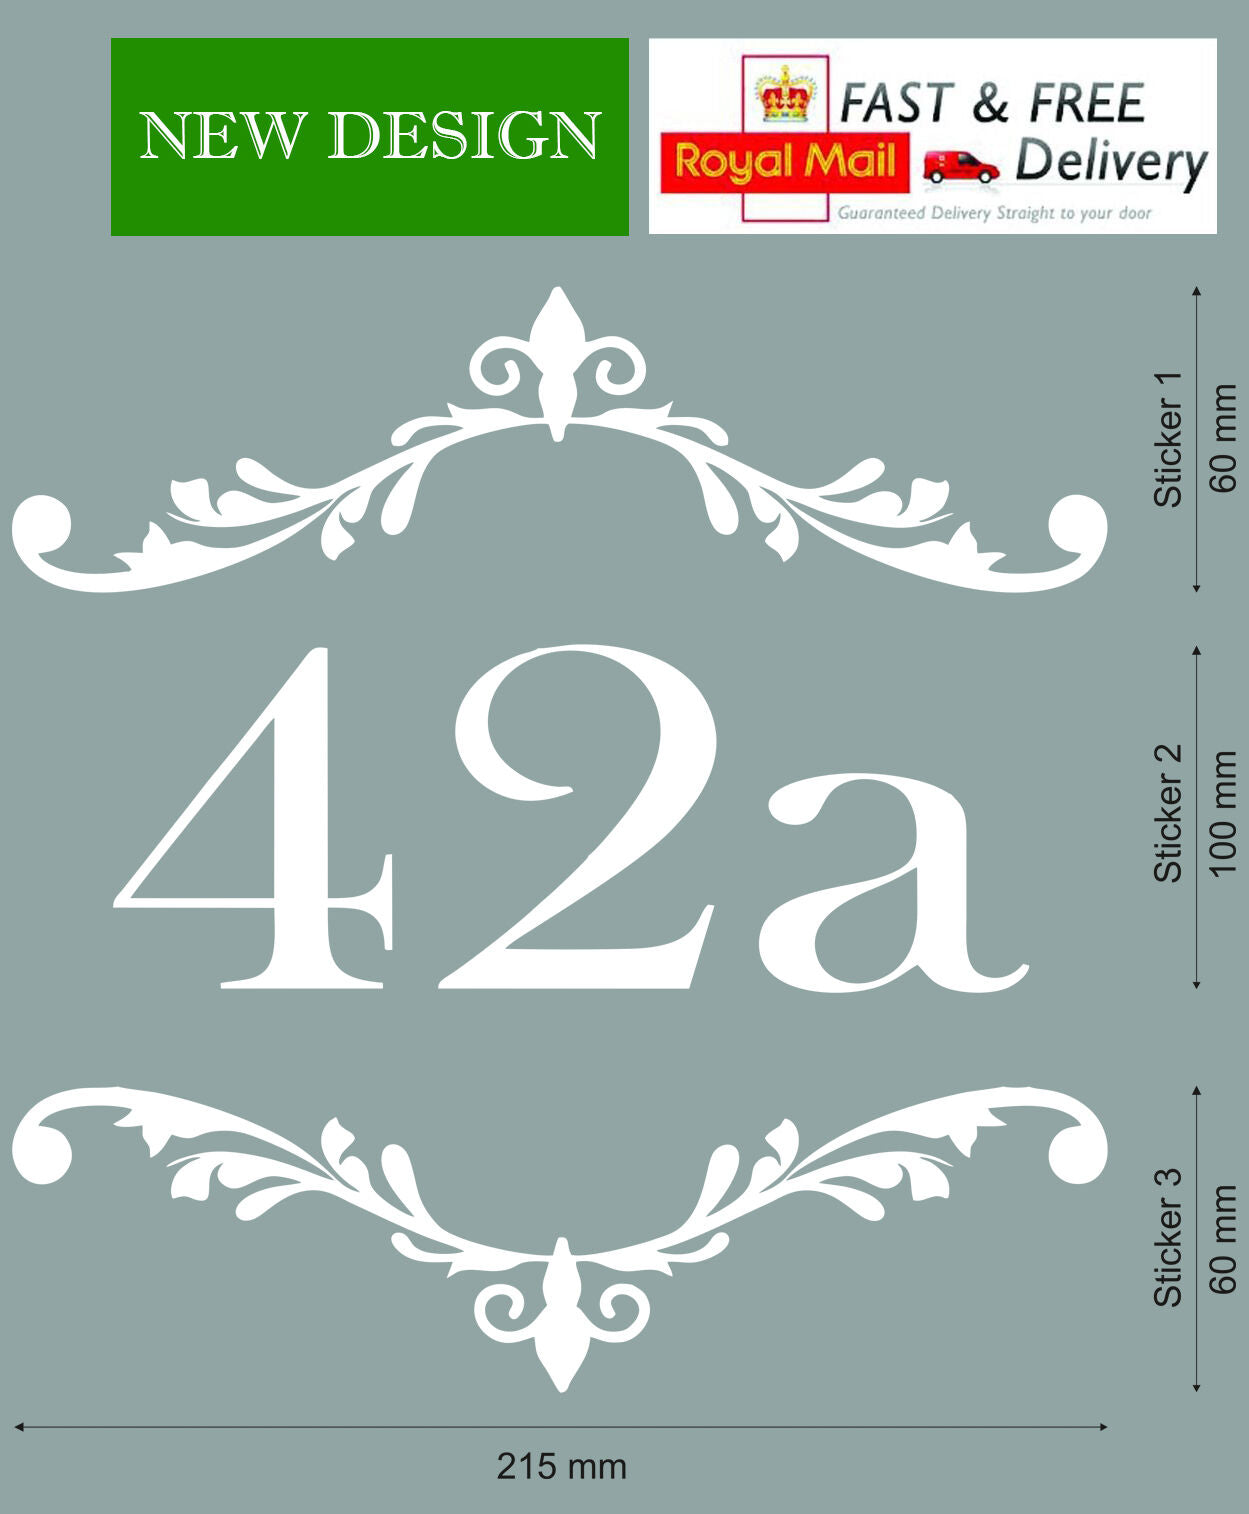 Personalised Door Numbers With Elegant Borders | Vinyl Door Numbers | New Design